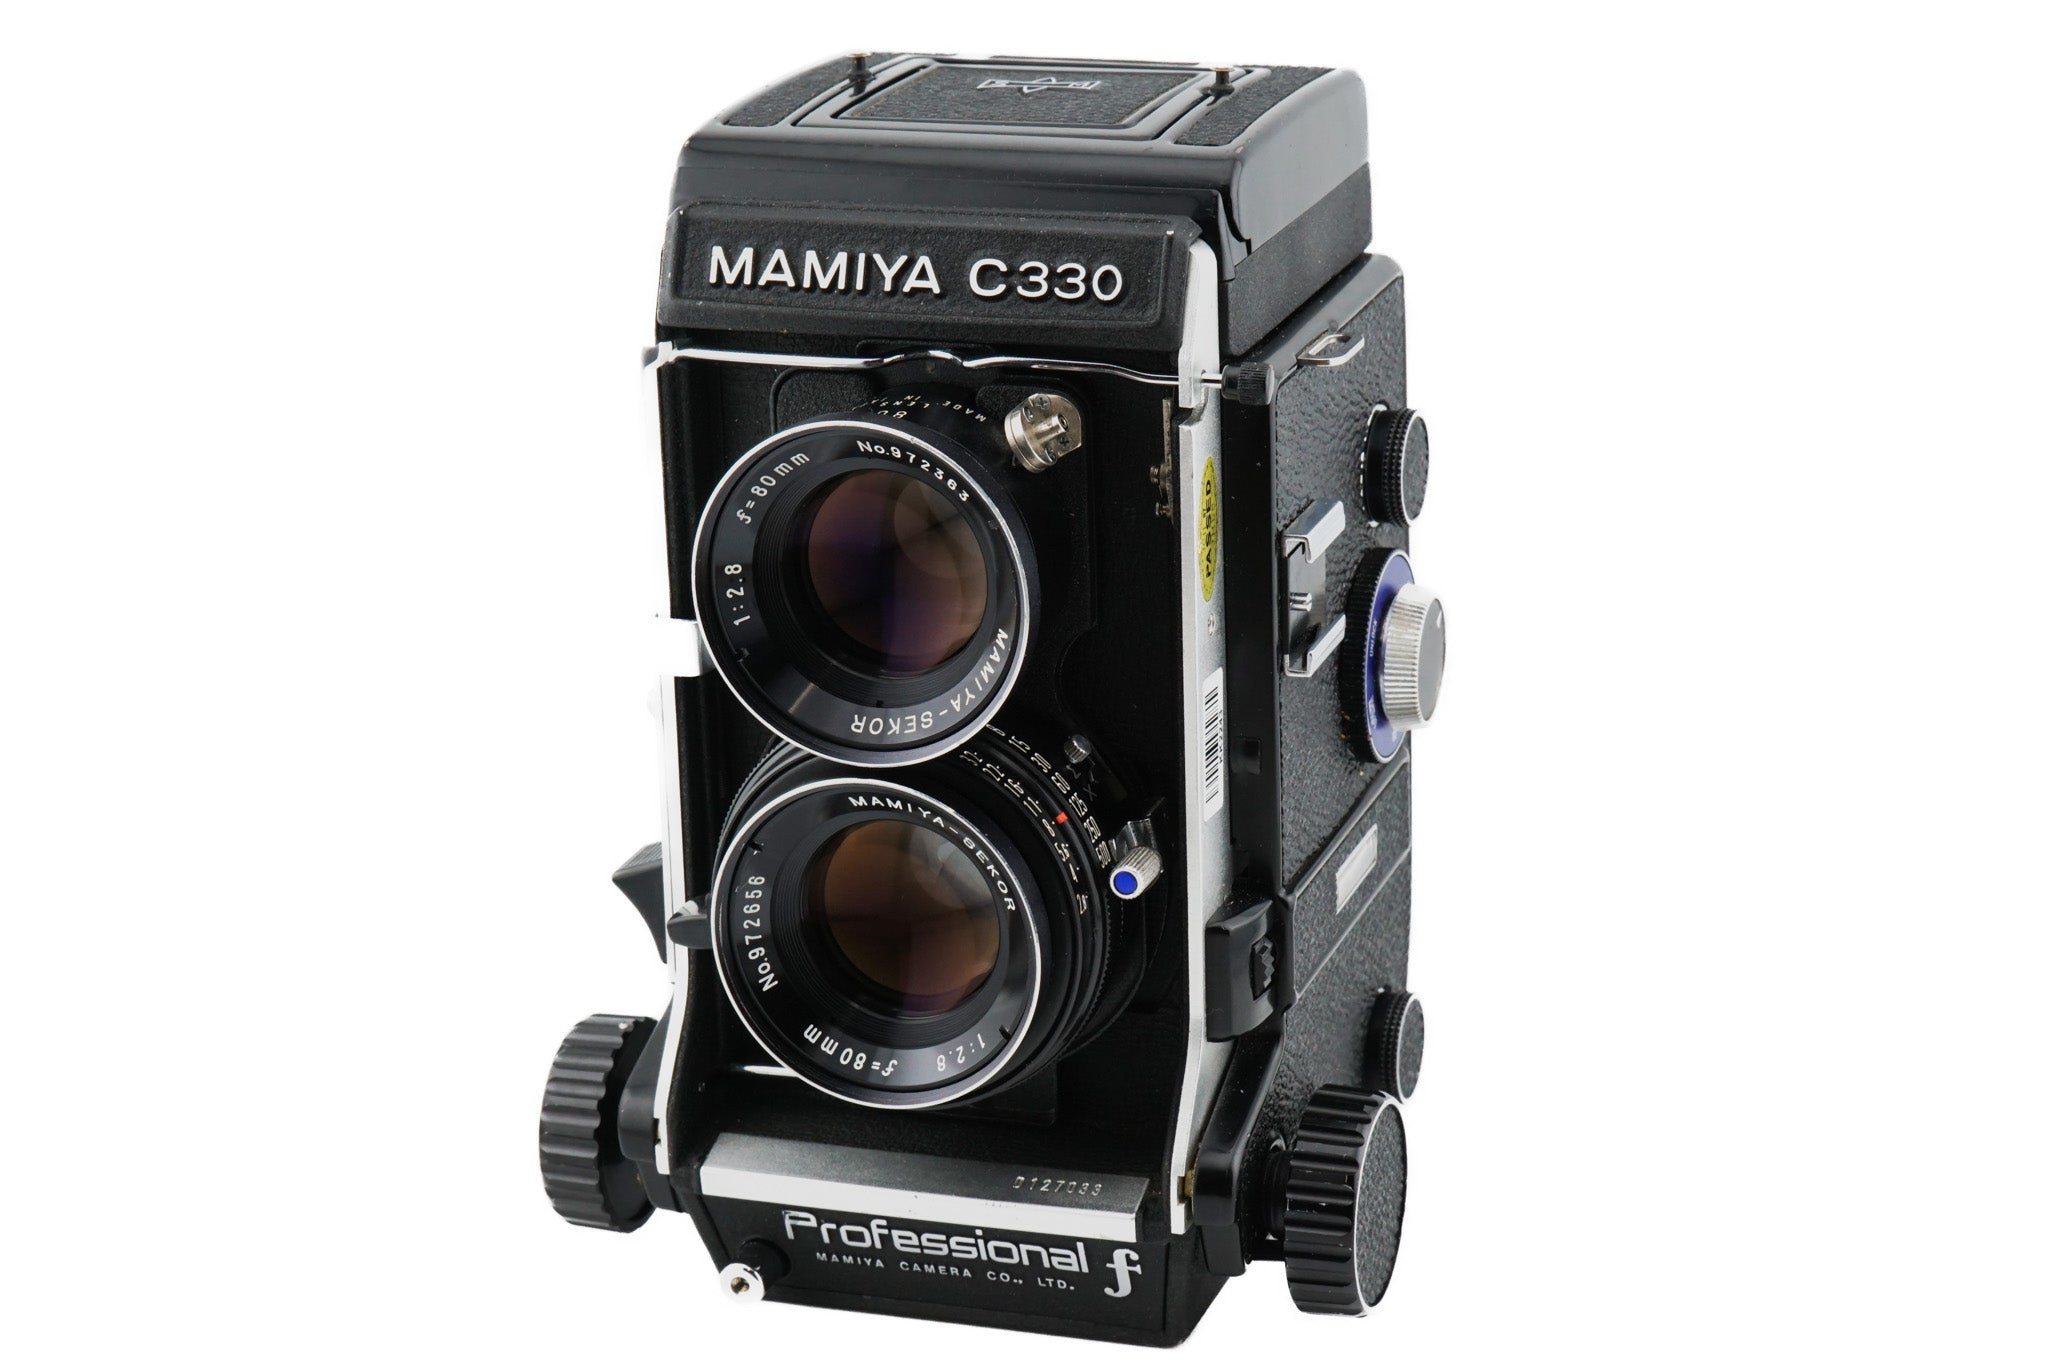 Mamiya C330 Professional F - Camera